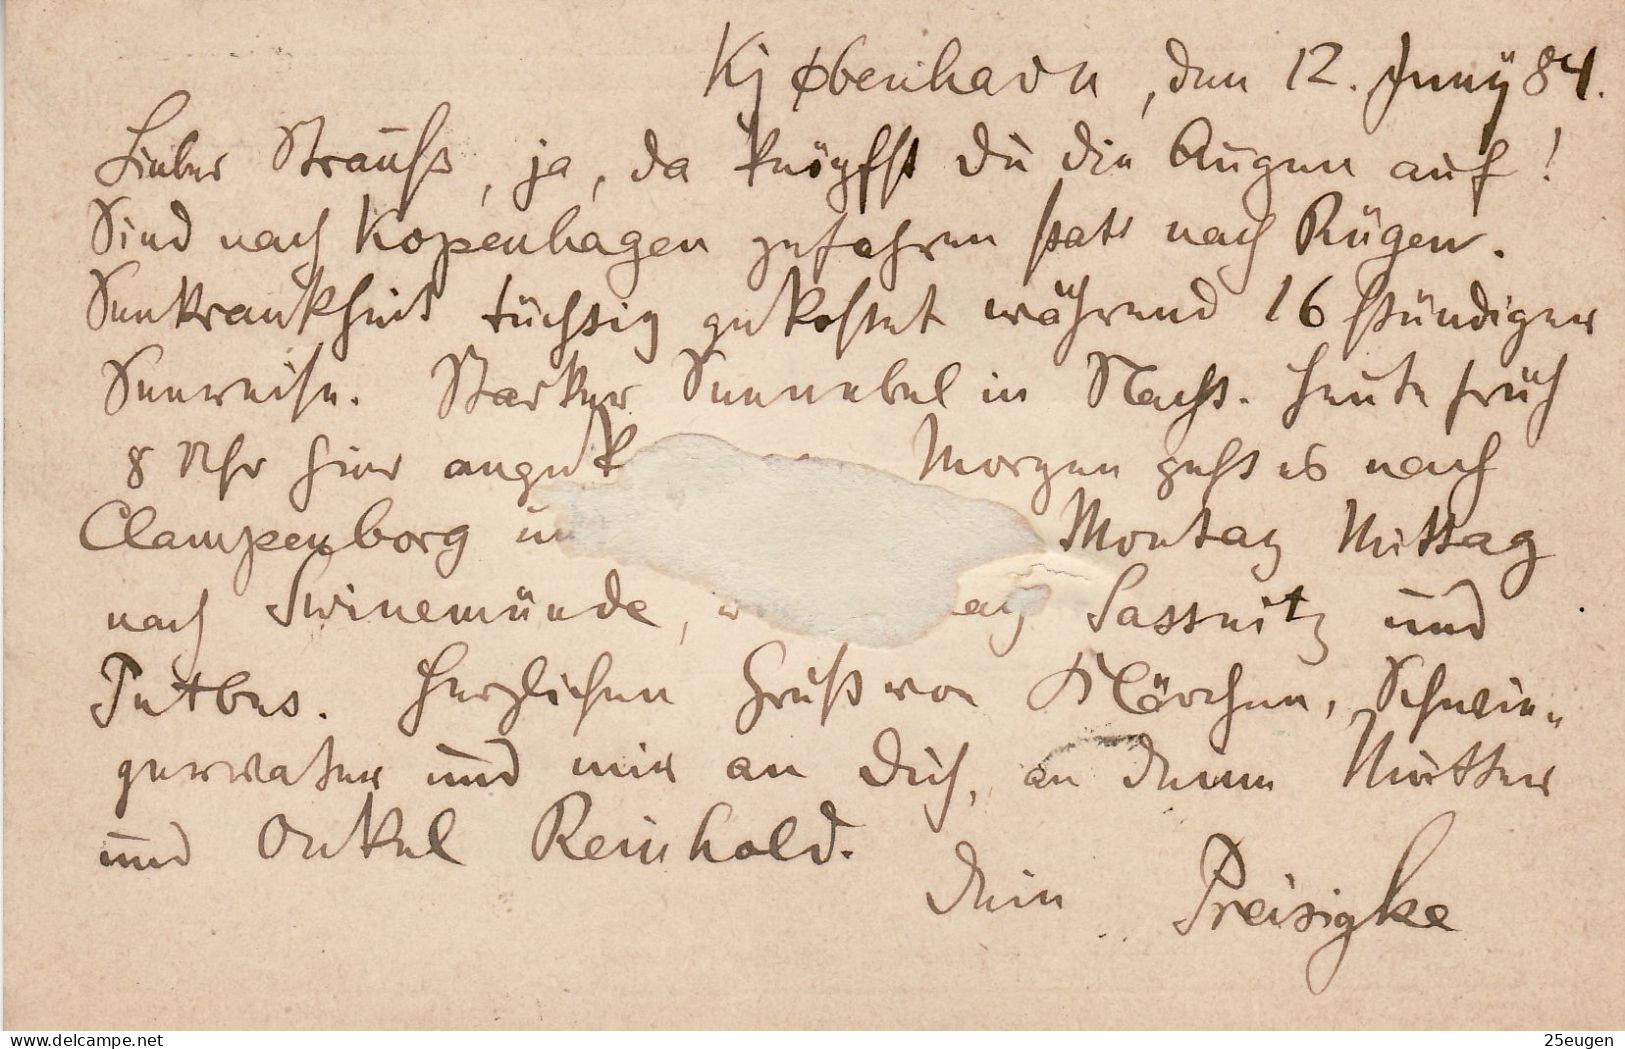 DENMARK 1884 POSTCARD MiNr P 23 SENT FROM KOBENHAVN TO BERLIN - Enteros Postales